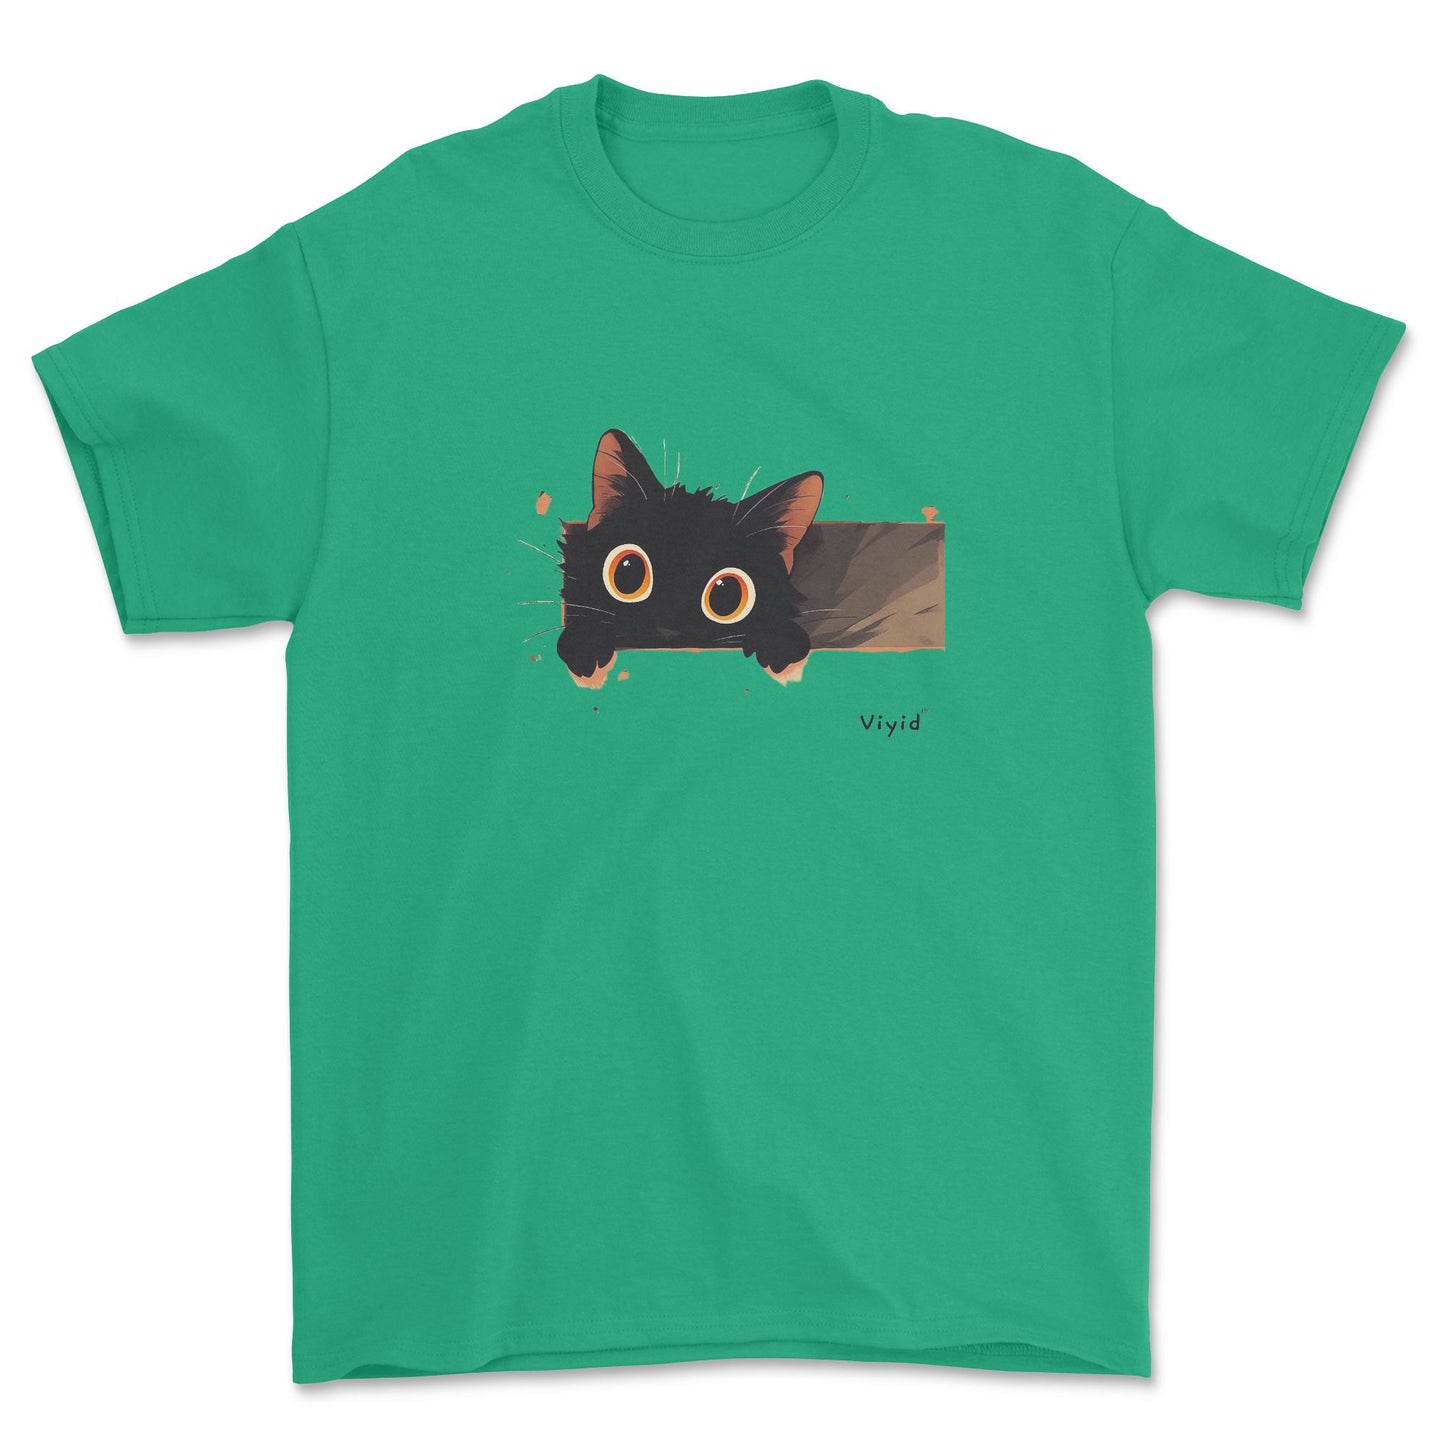 Peeping black cat youth t-shirt irish green